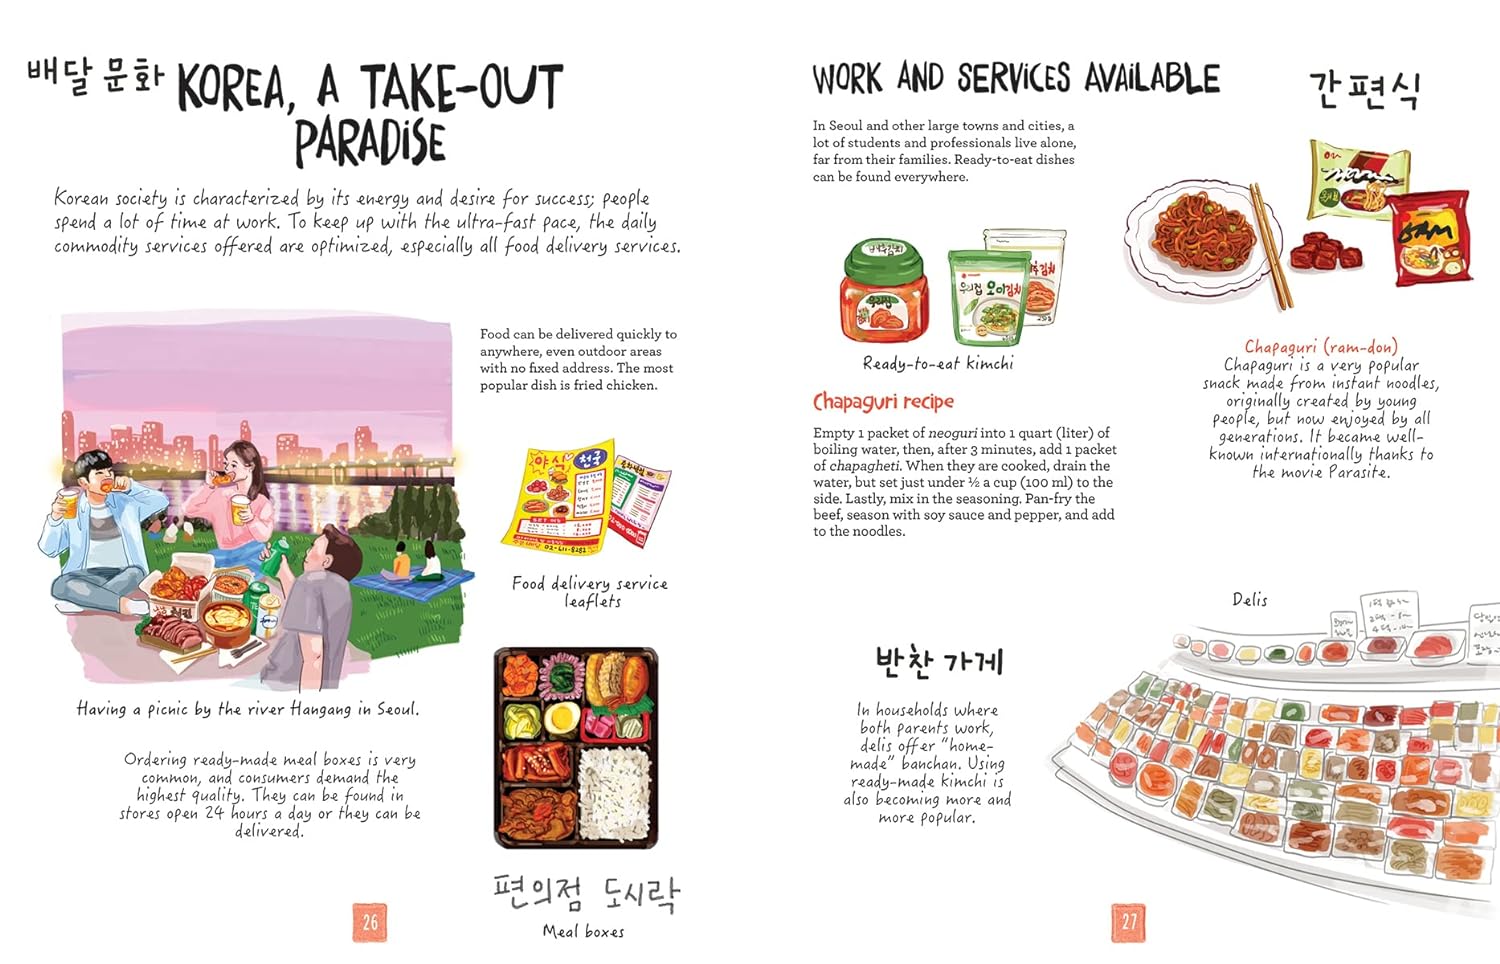 Korean Cuisine: An Illustrated Guide (Luna Kyung)